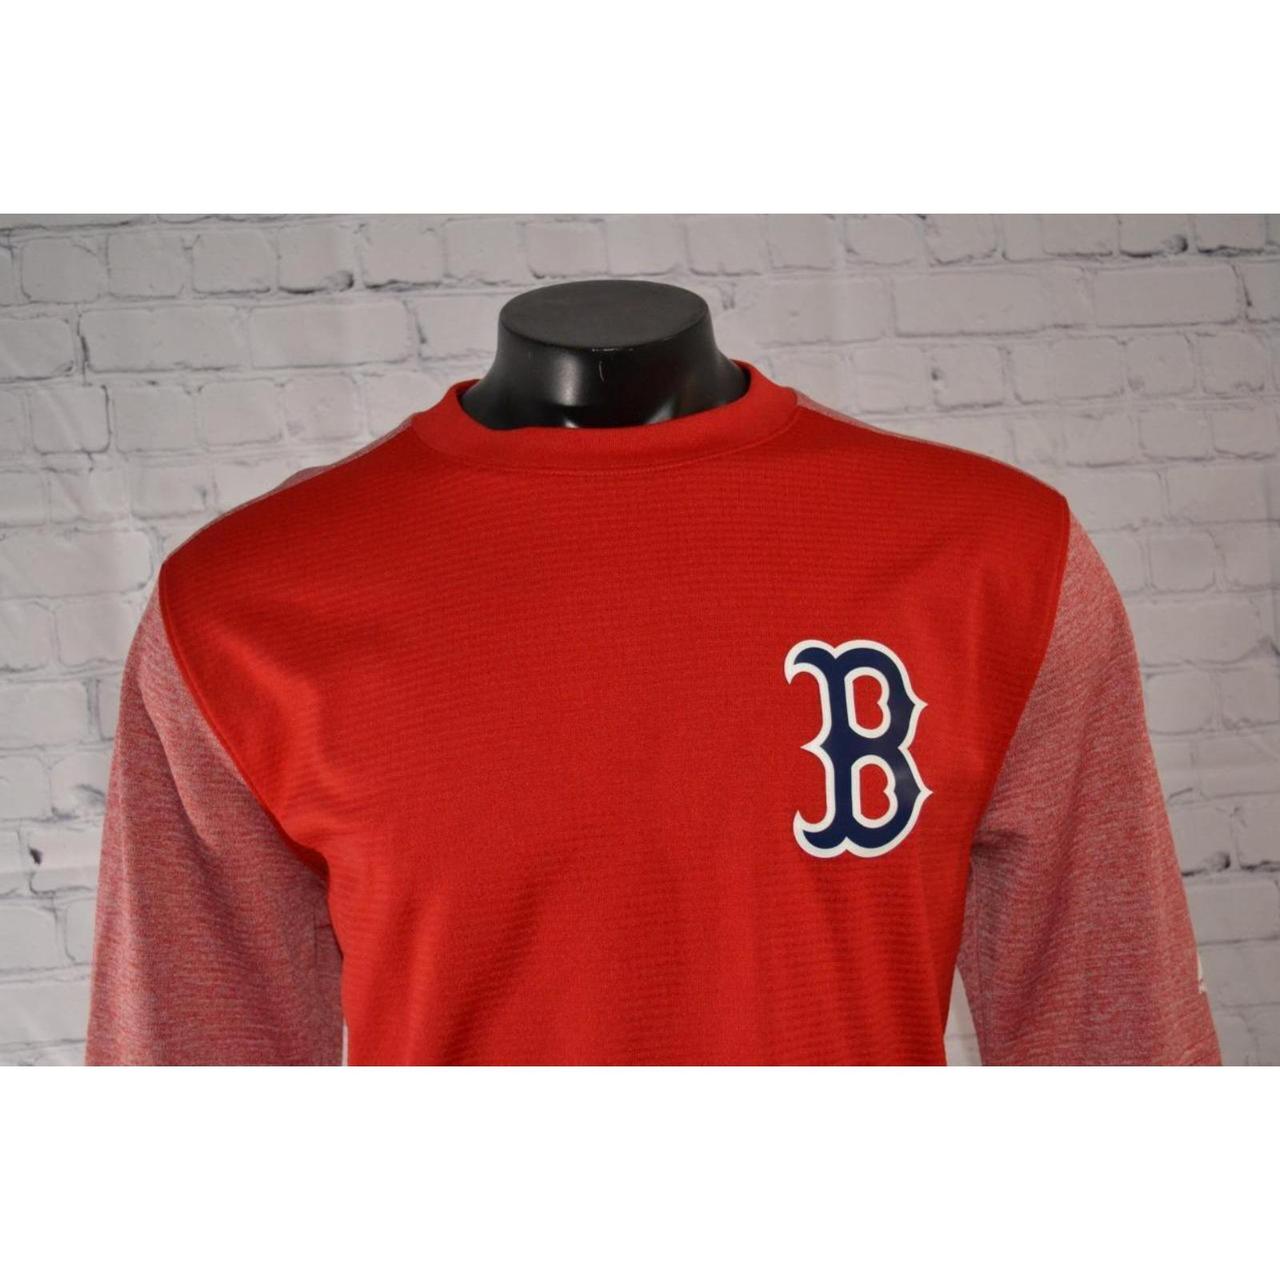 MLB Men's Shirt - Red - L